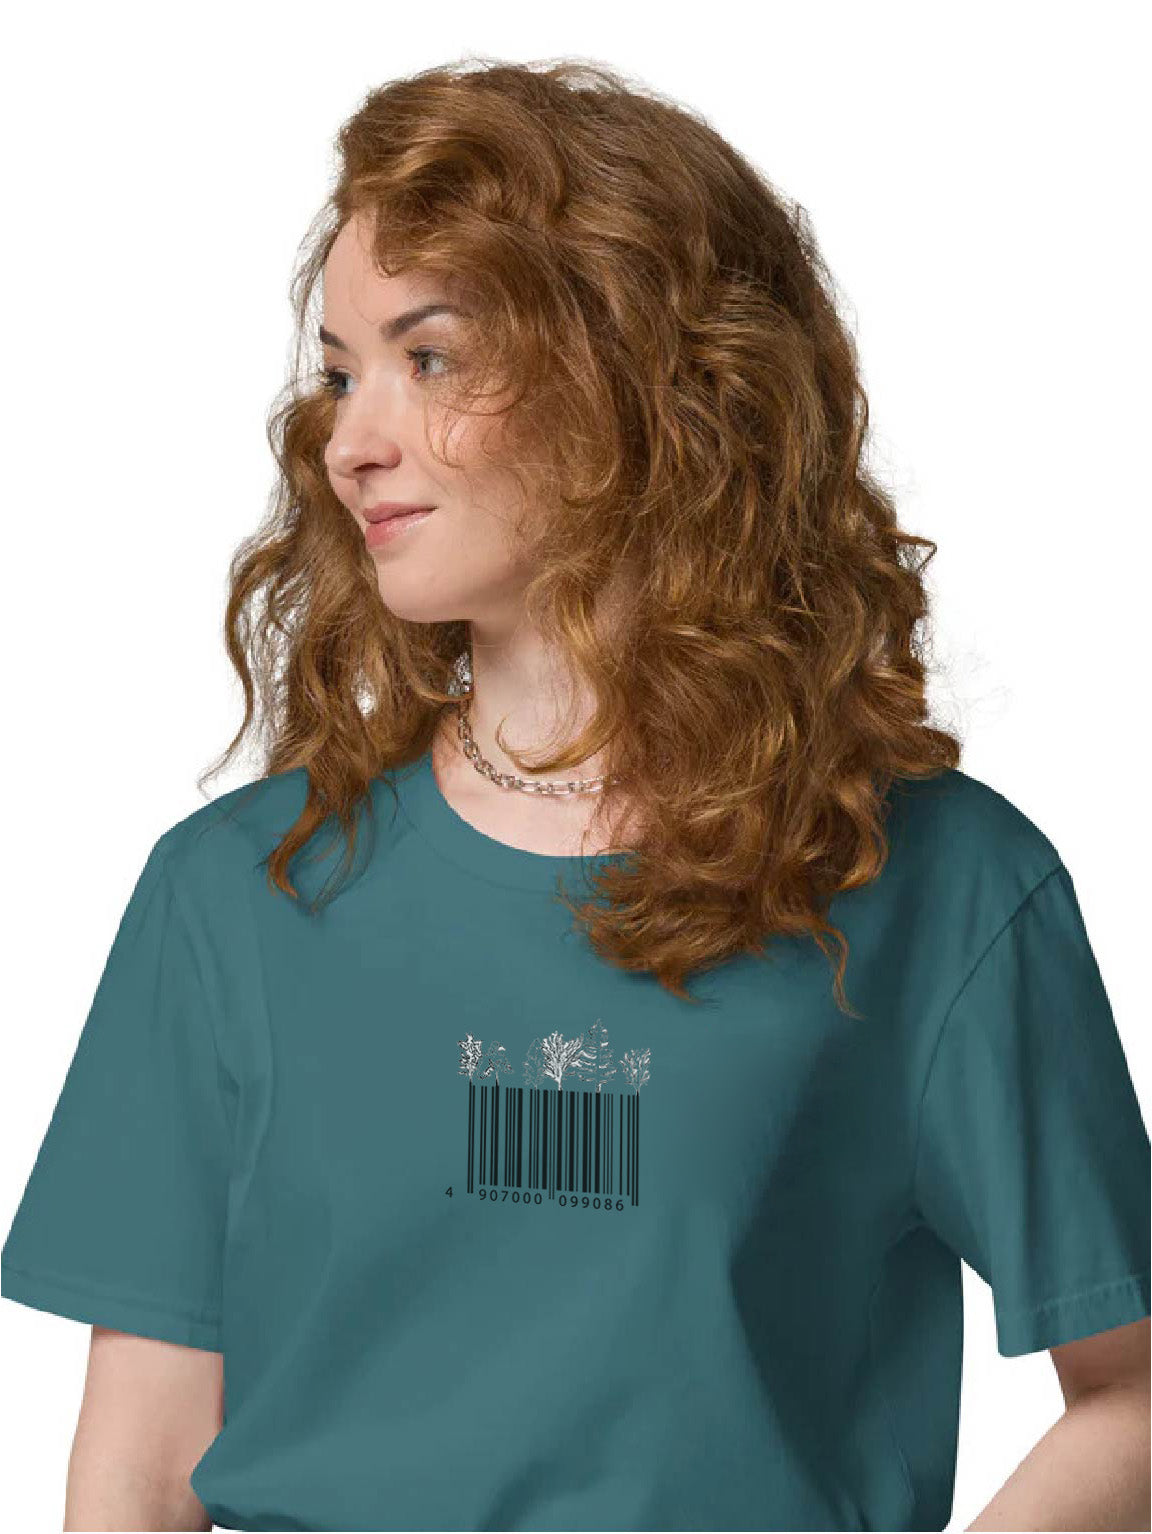 Deforestation - Unisex Relaxed Organic Cotton T-Shirt - Limited Colours M - XXXL